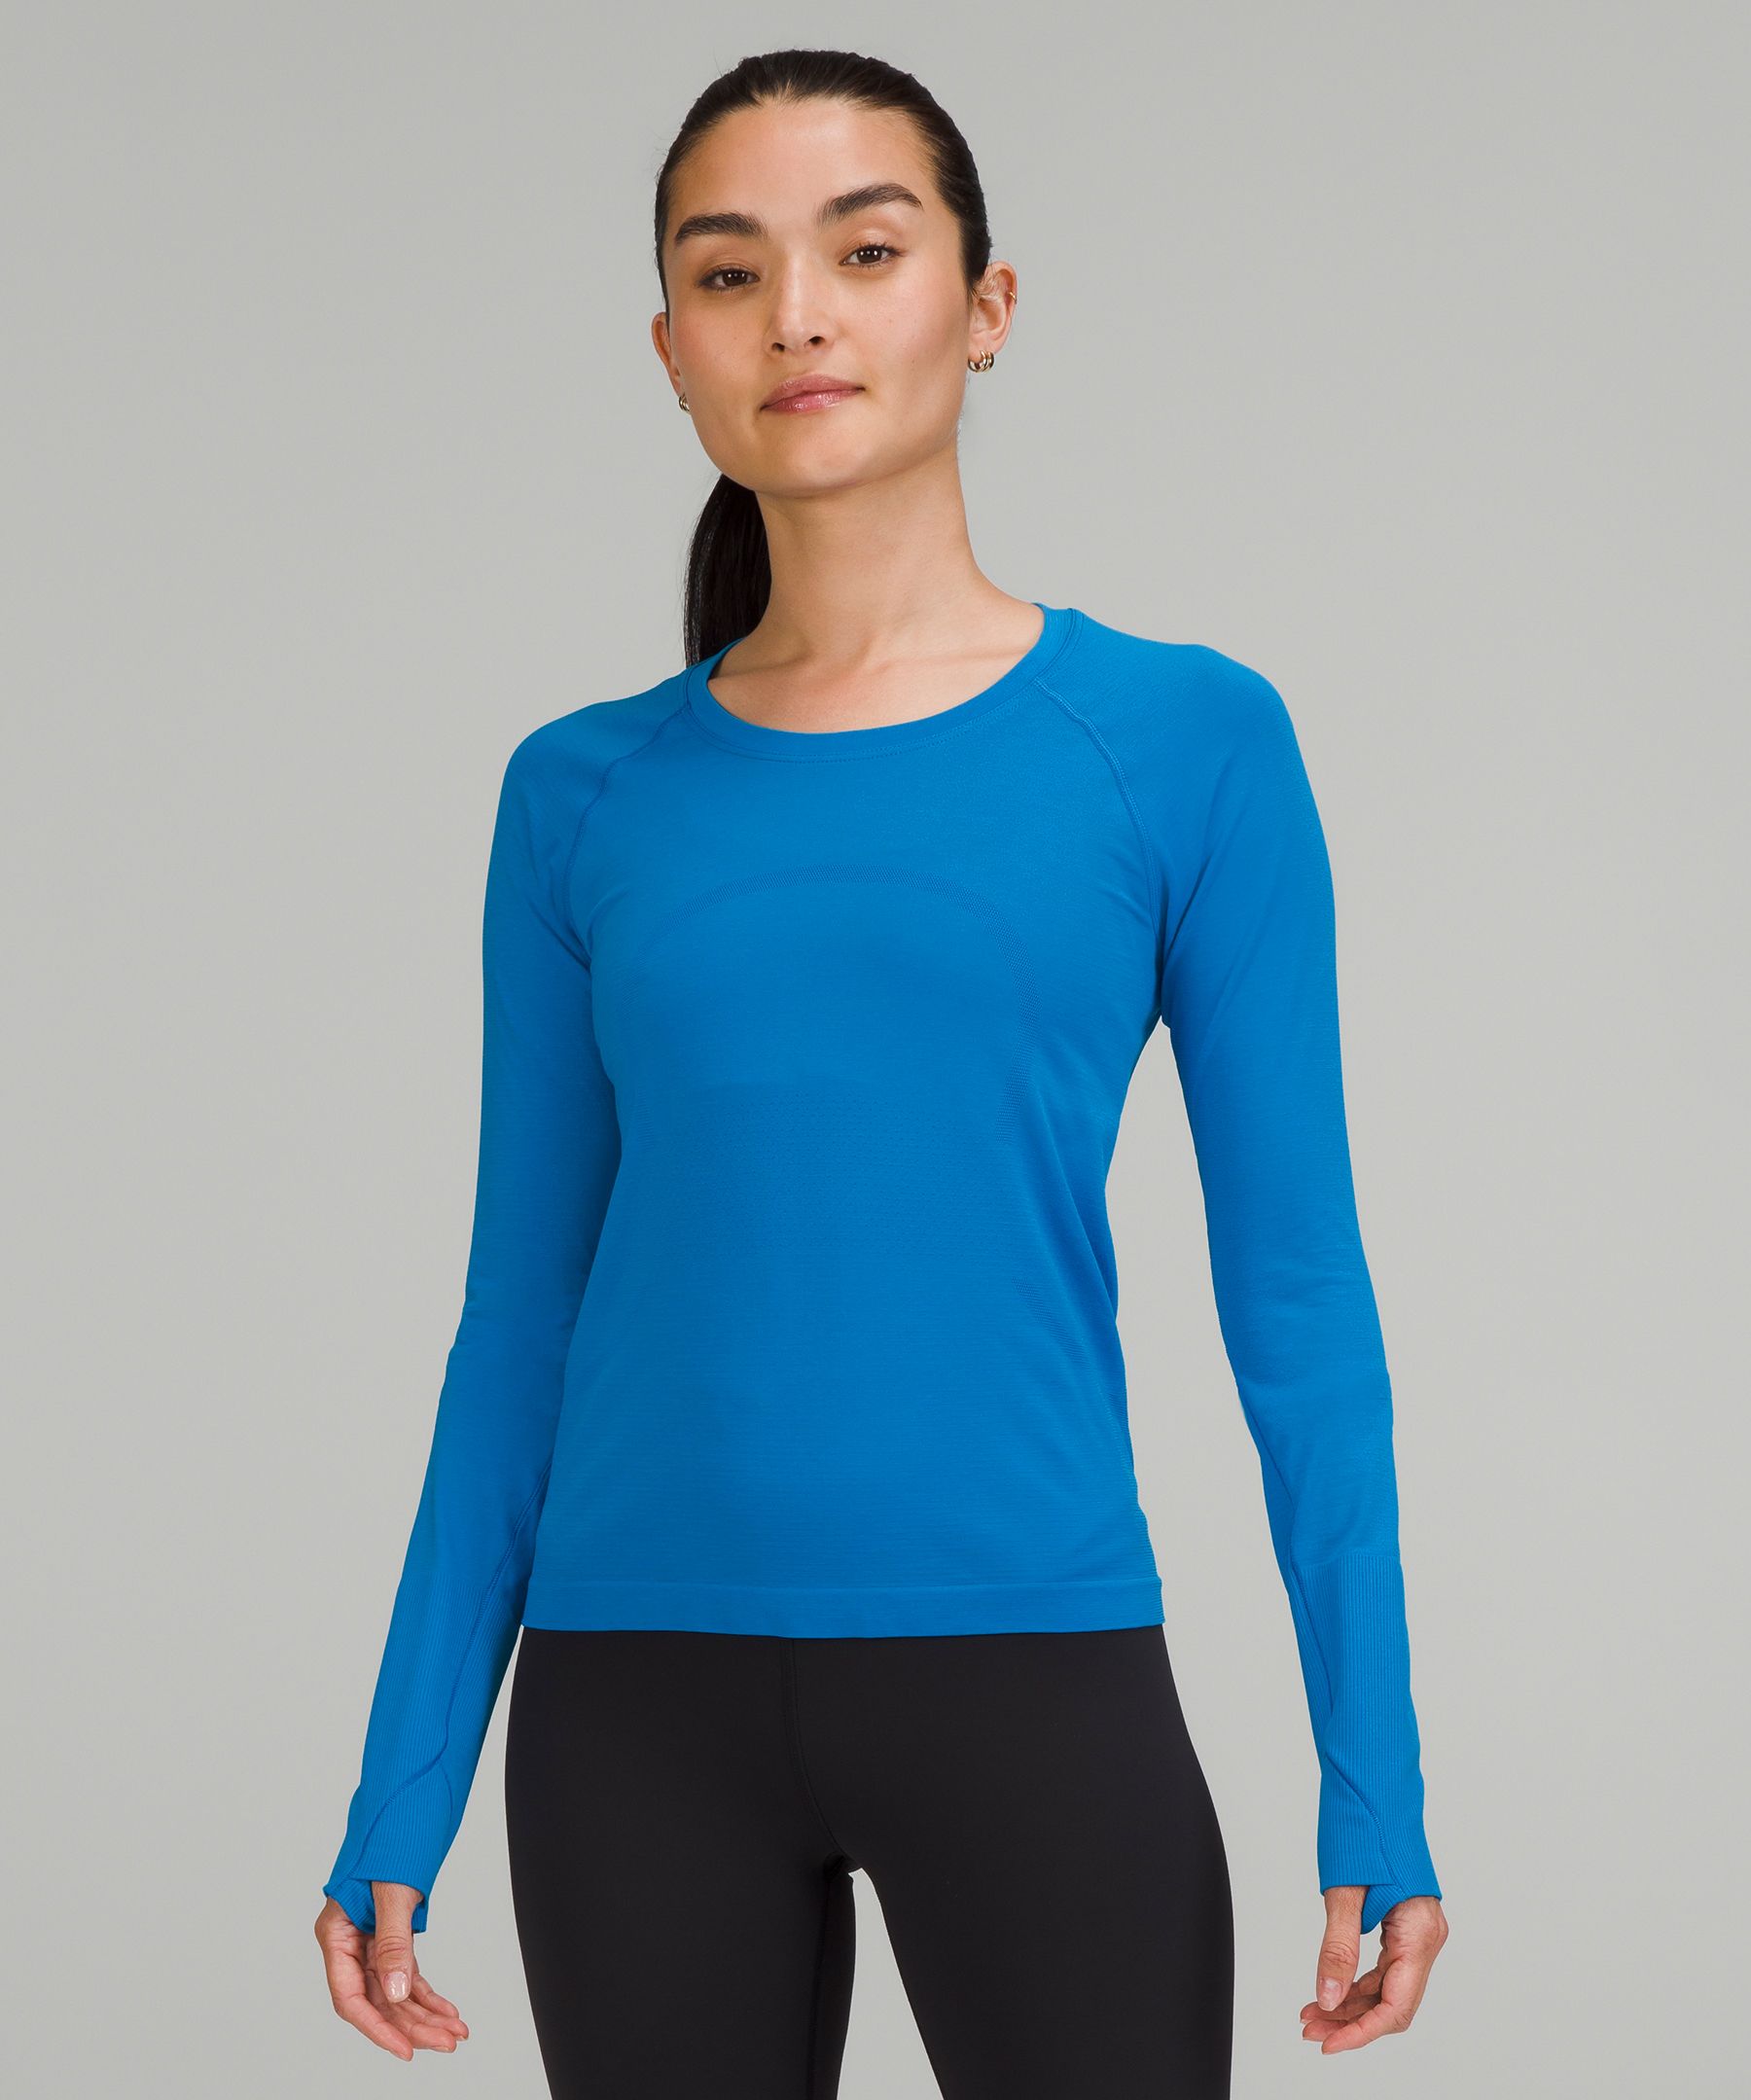 Lululemon Swiftly Tech Short Sleeve Shirt 2.0 In Mineral Blue